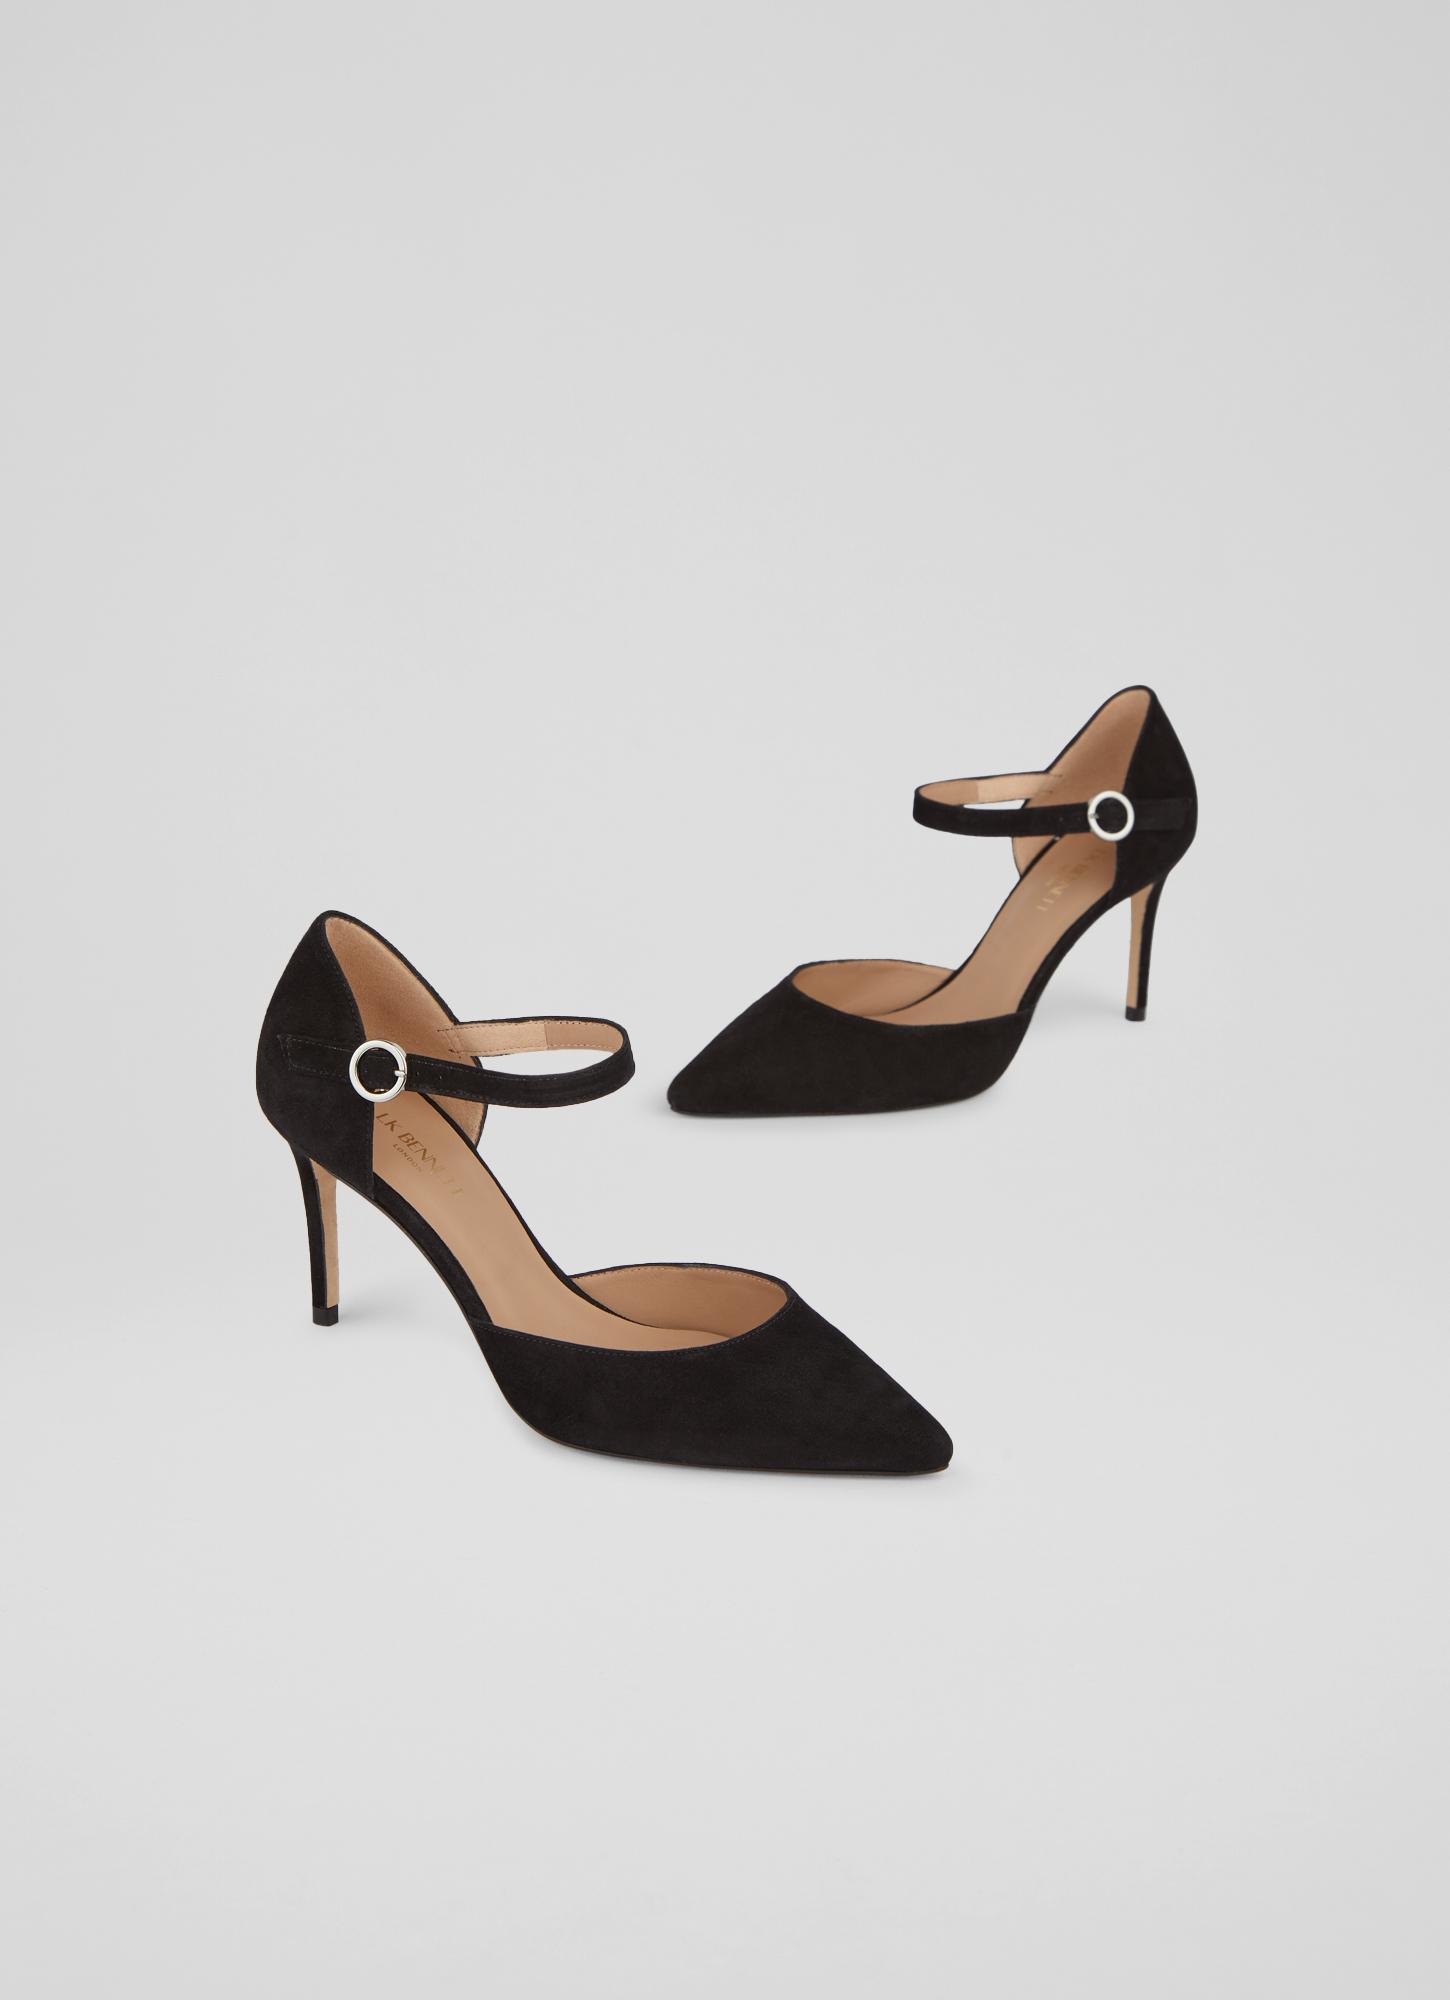 Black Suede Stiletto High Heel Sandals Open Toe Ankle Strap Thin High Heel  Fashion Women Sandals Black Dress Shoes - Women's Sandals - AliExpress